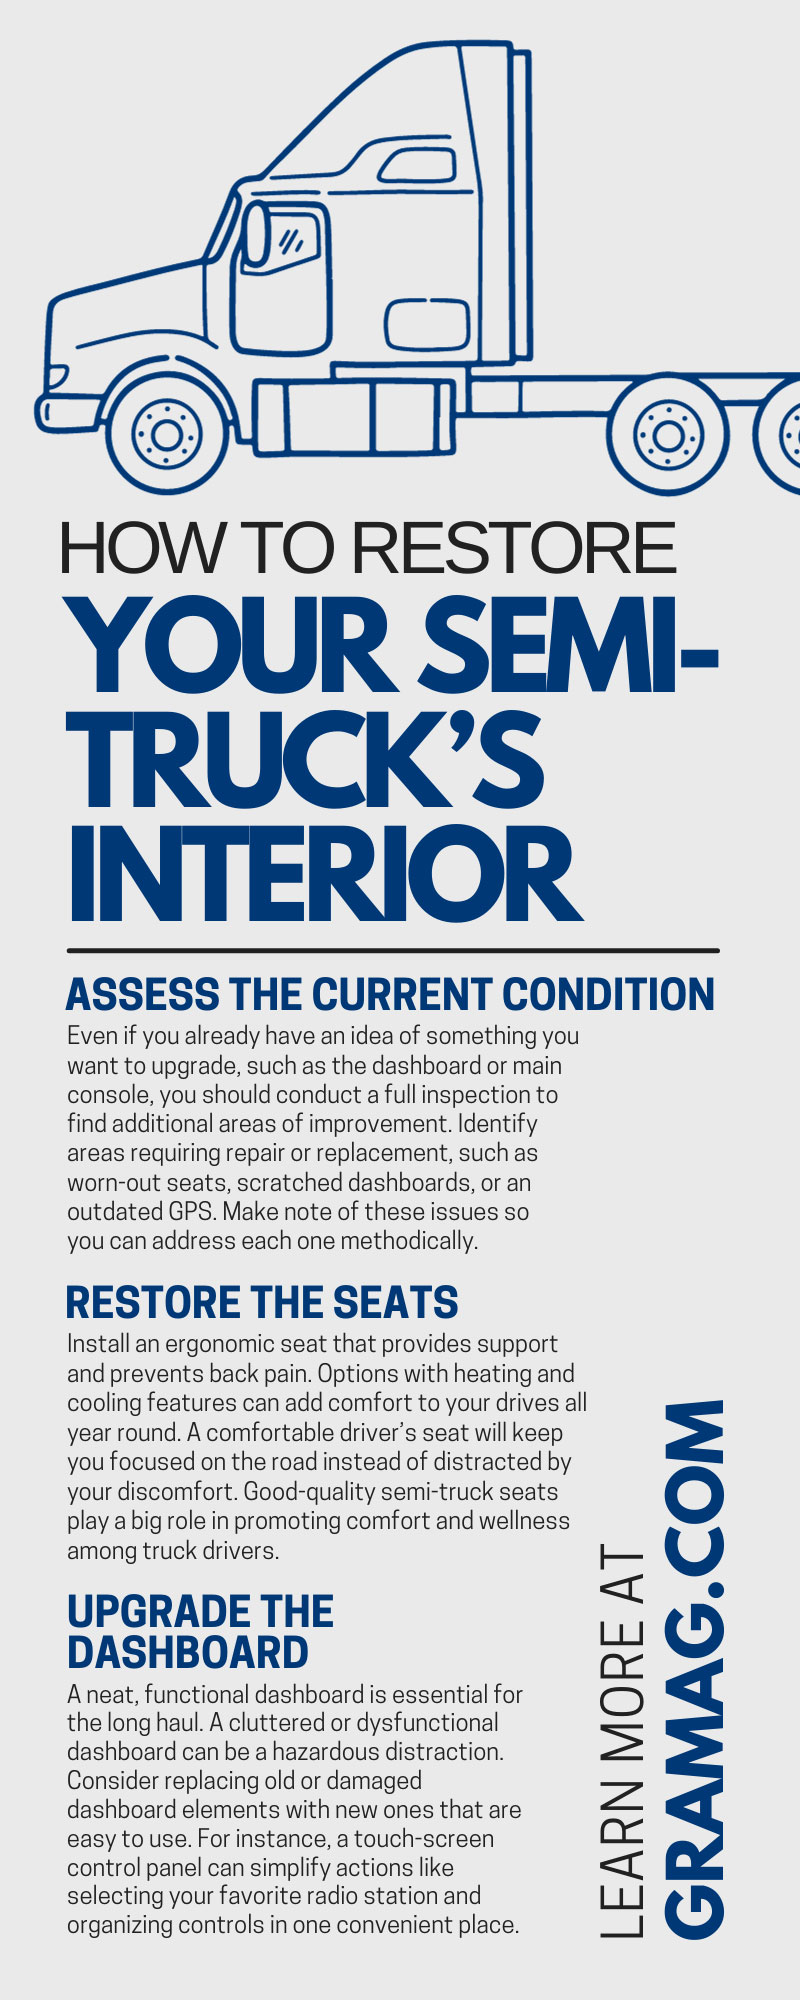 How To Restore Your Semi-Truck’s Interior